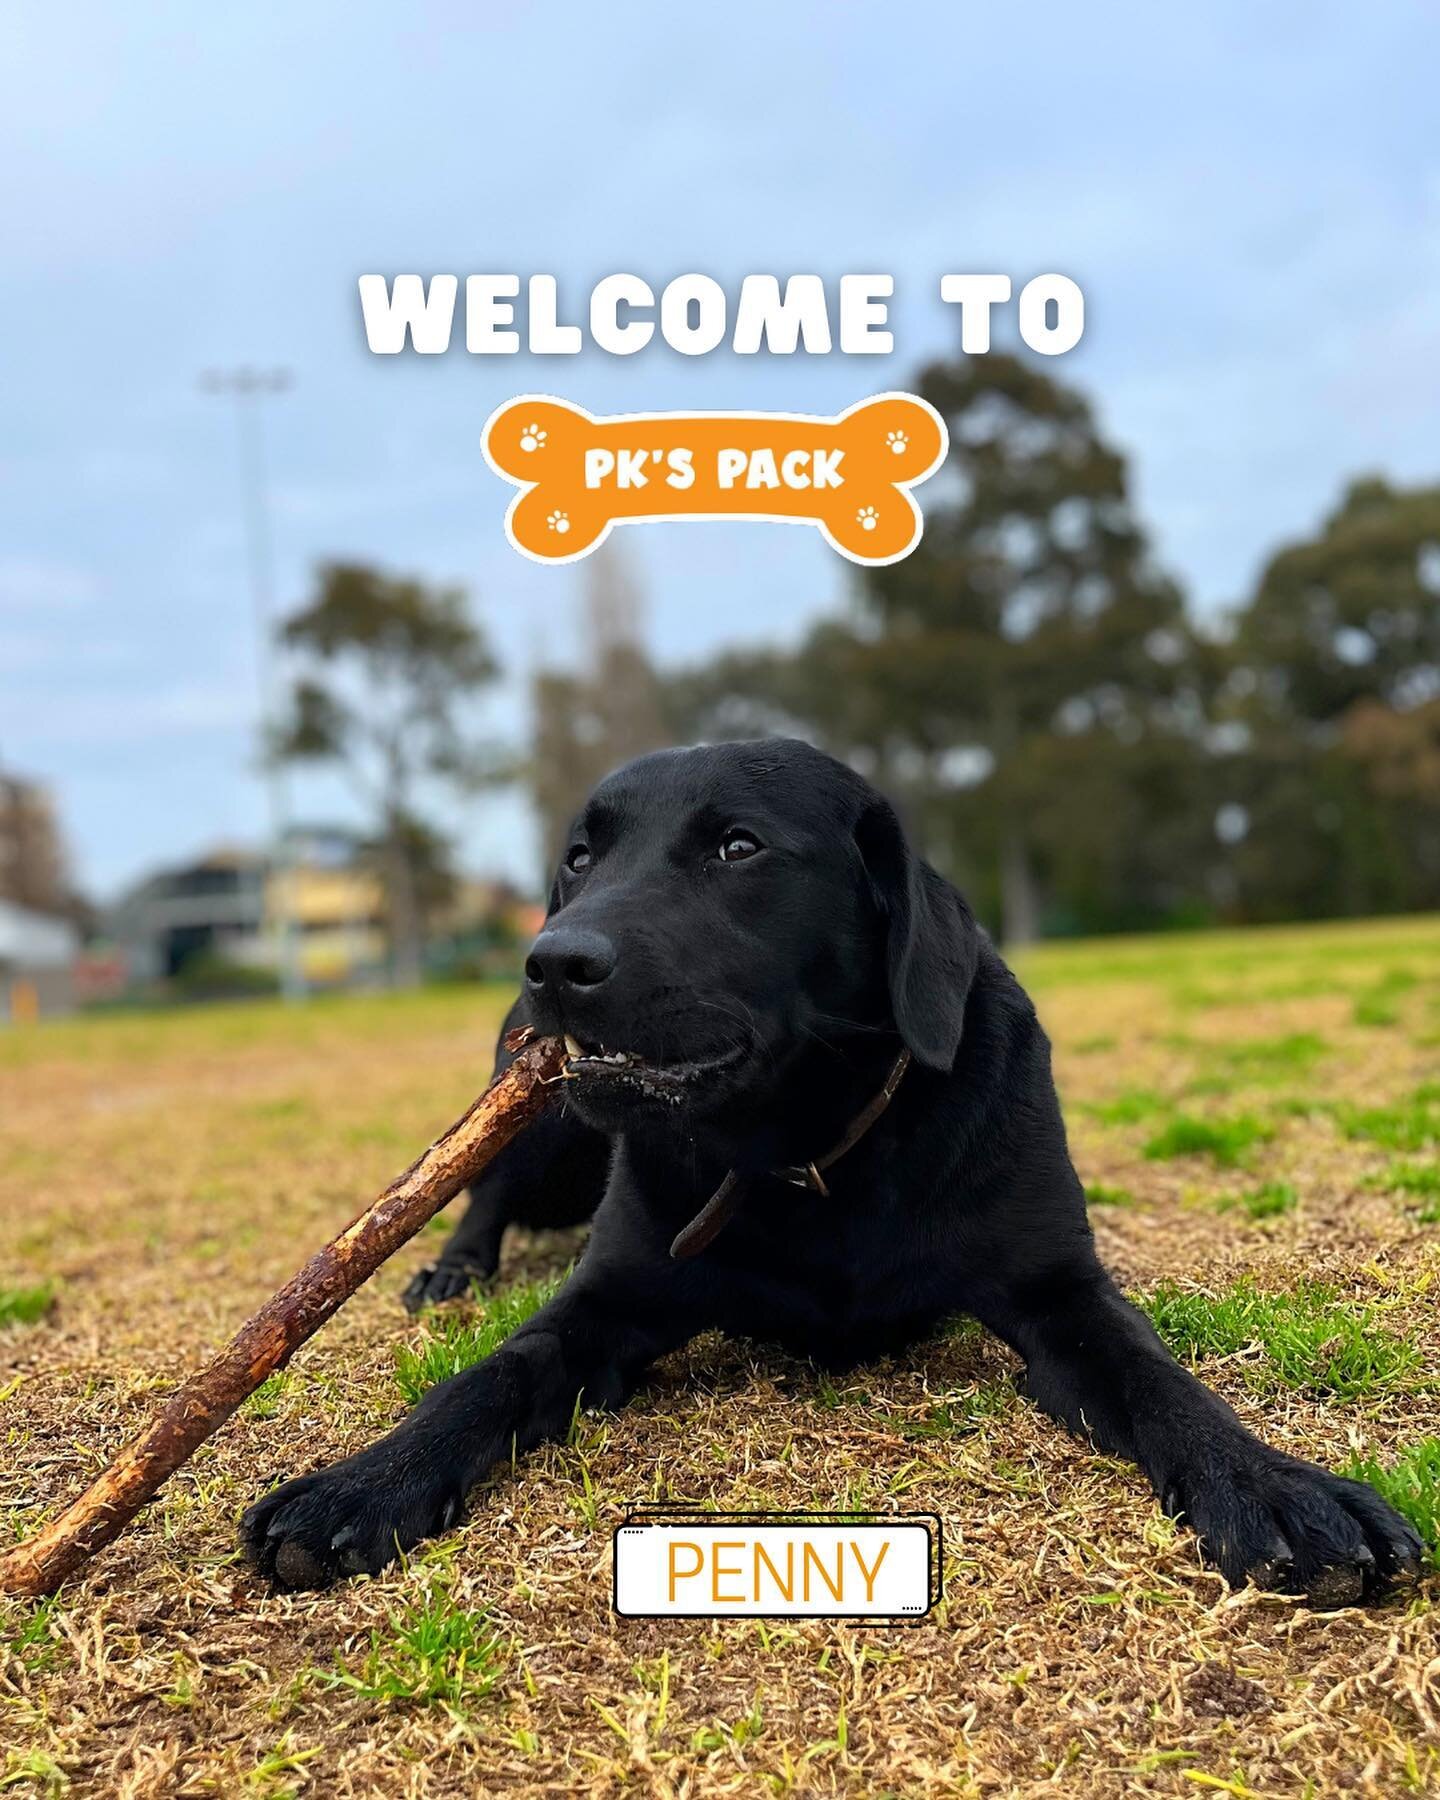 Welcome Penny!
.
.
.
.
#dogs #dogsofinstagram #dogsofmelbourne #labrador #labradorretriever #blacklab #labradorpuppy #labradorable #dogphotography #dogphoto #dogwalkersofmelbourne #albertpark